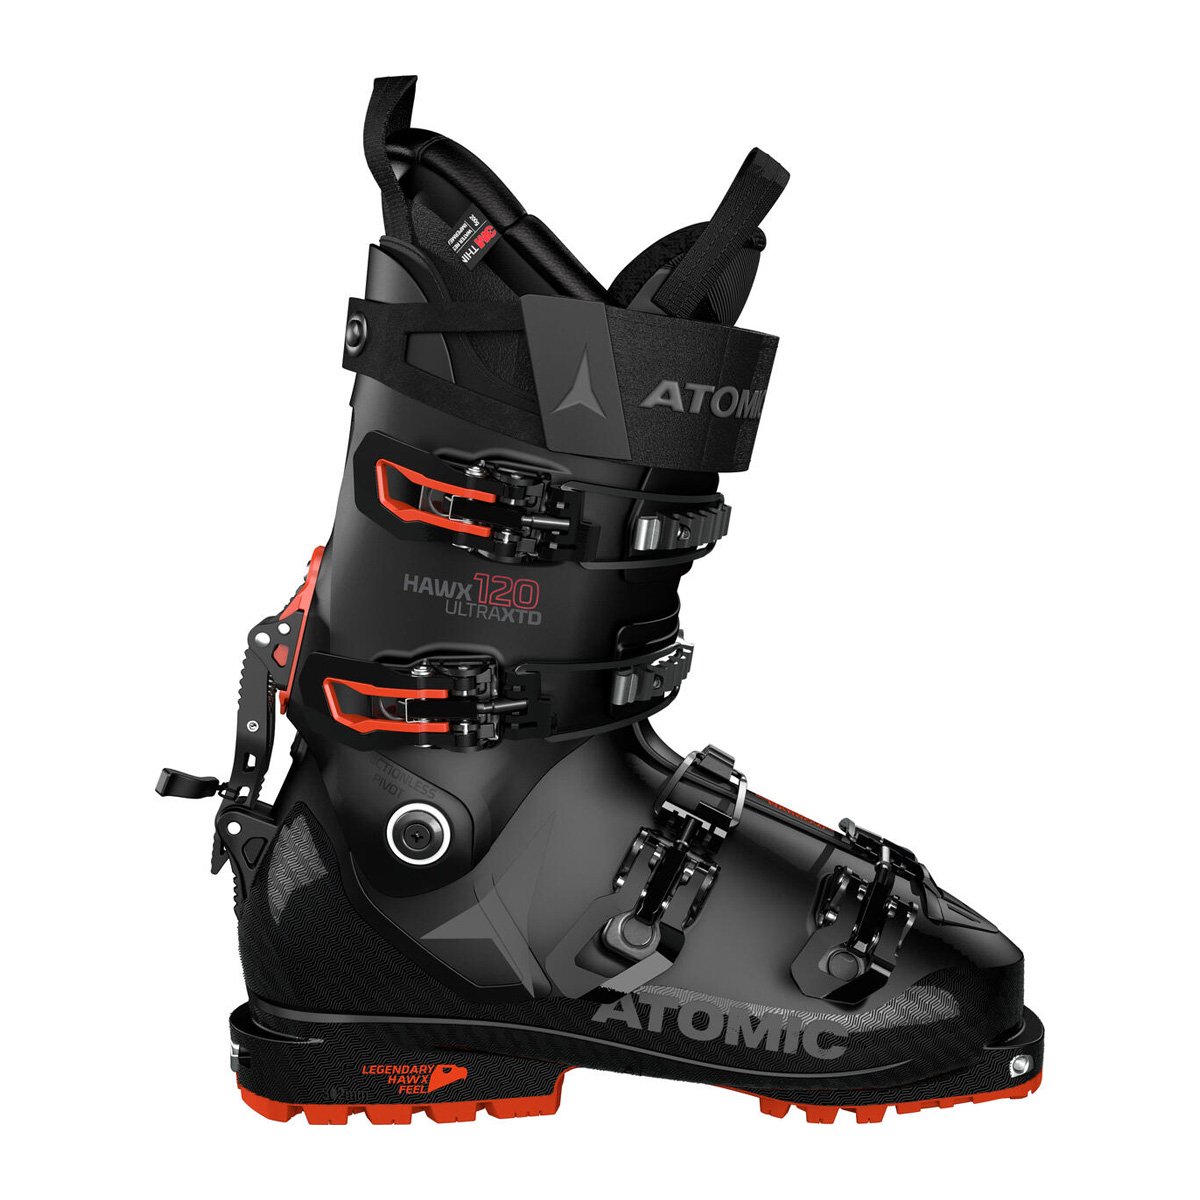 Горнолыжные ботинки Atomic Hawx Ultra Xtd 120 Ct 2021 black/red, 26-26,5 см